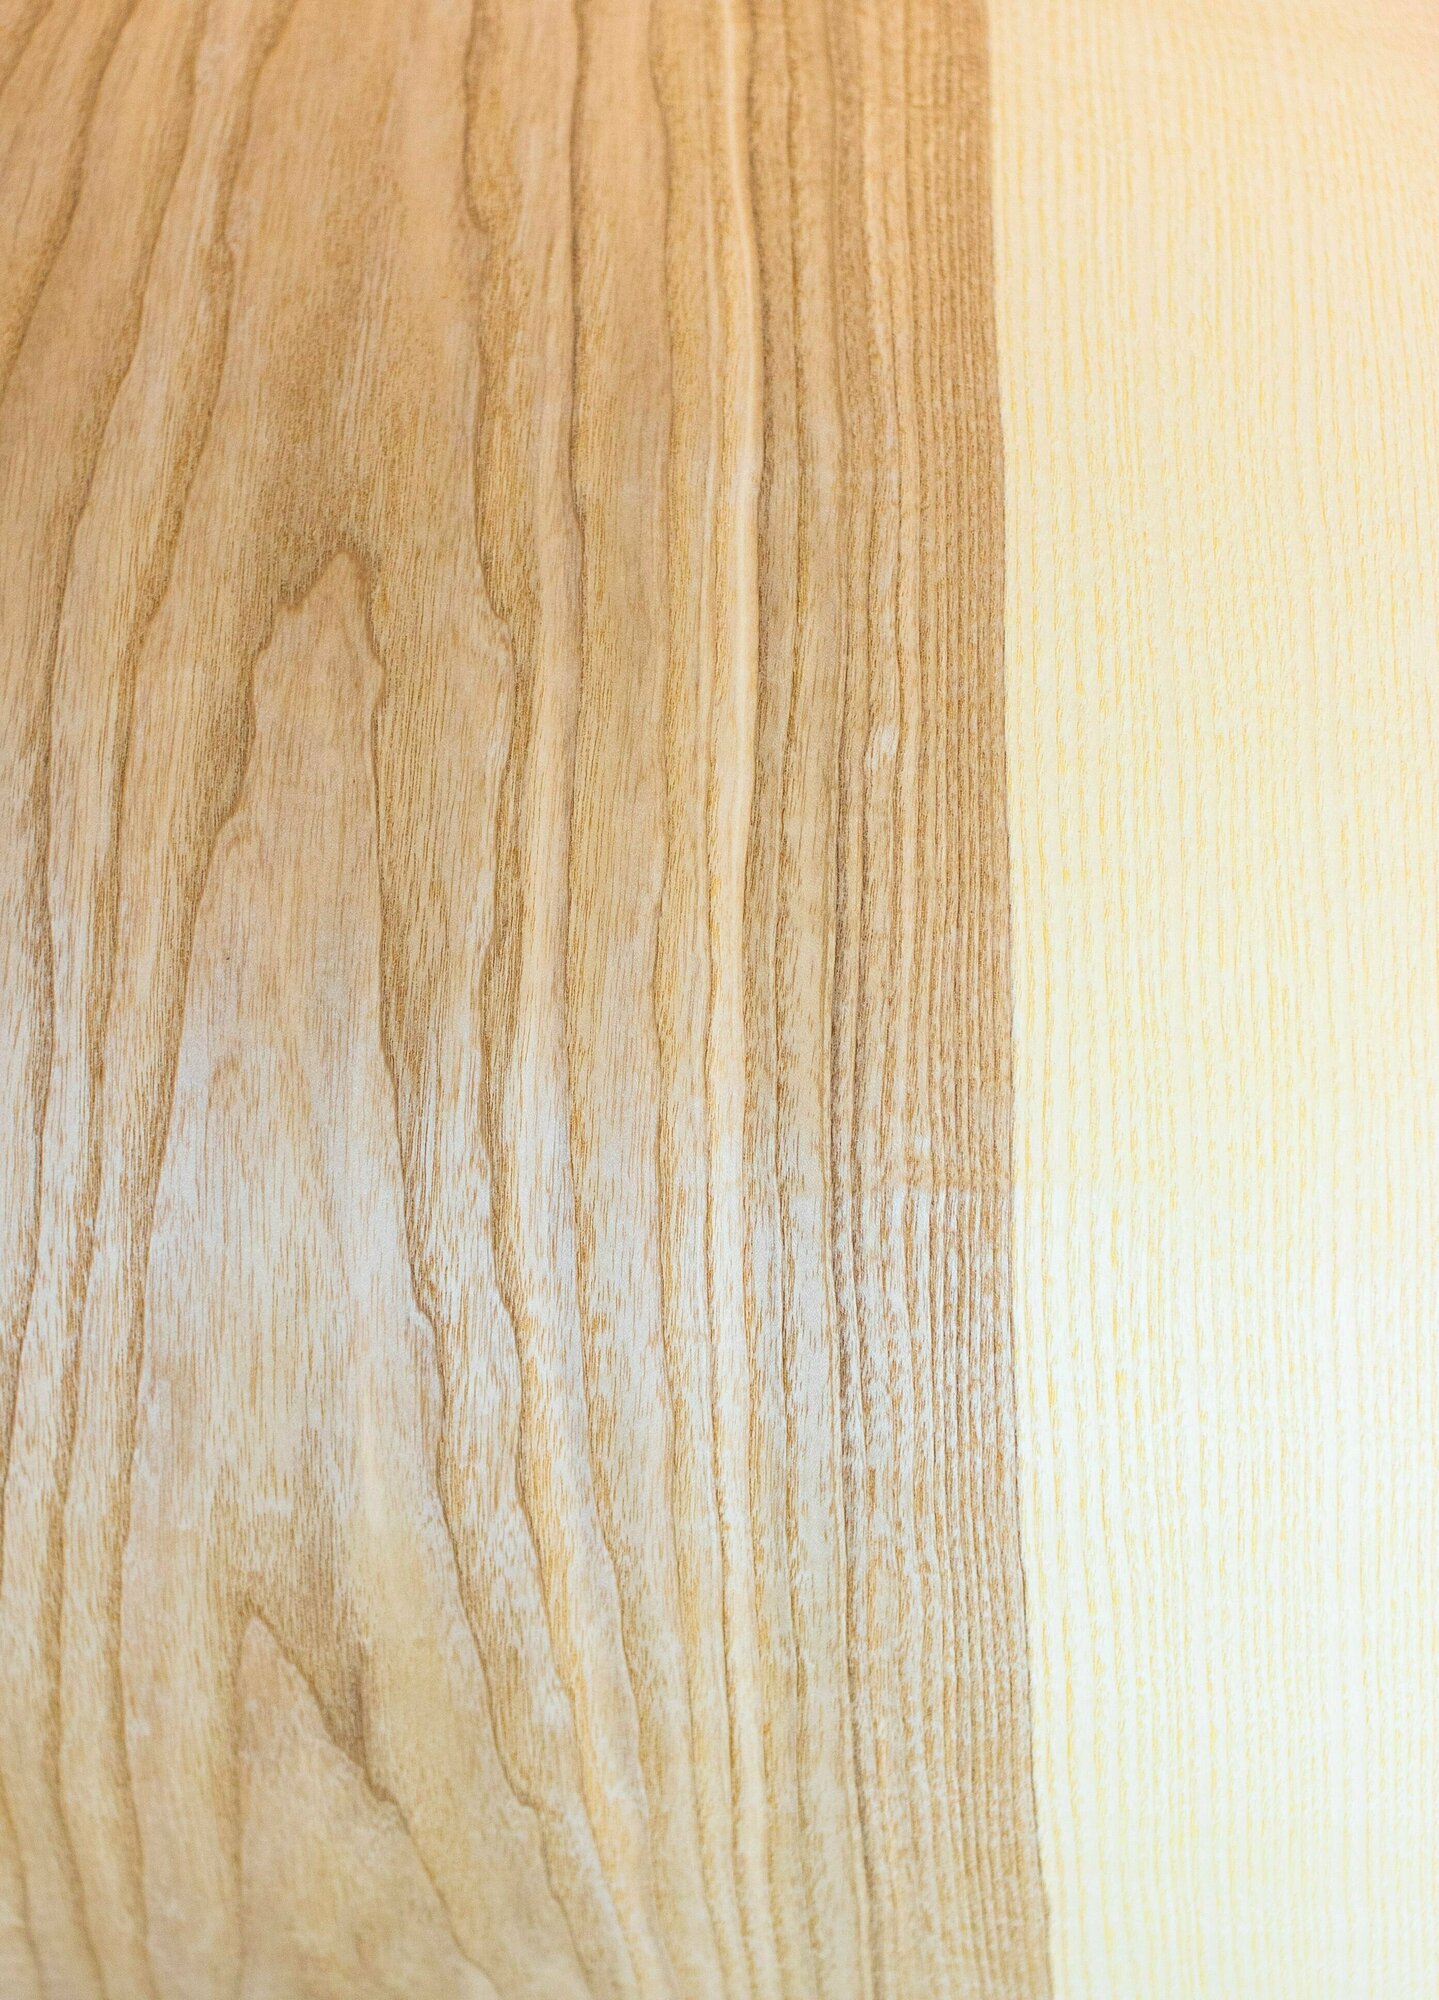 Шпон Ясень Оливковый широкий для творчества толщиной 0.6мм. 1.3х0.26 м 1 лист